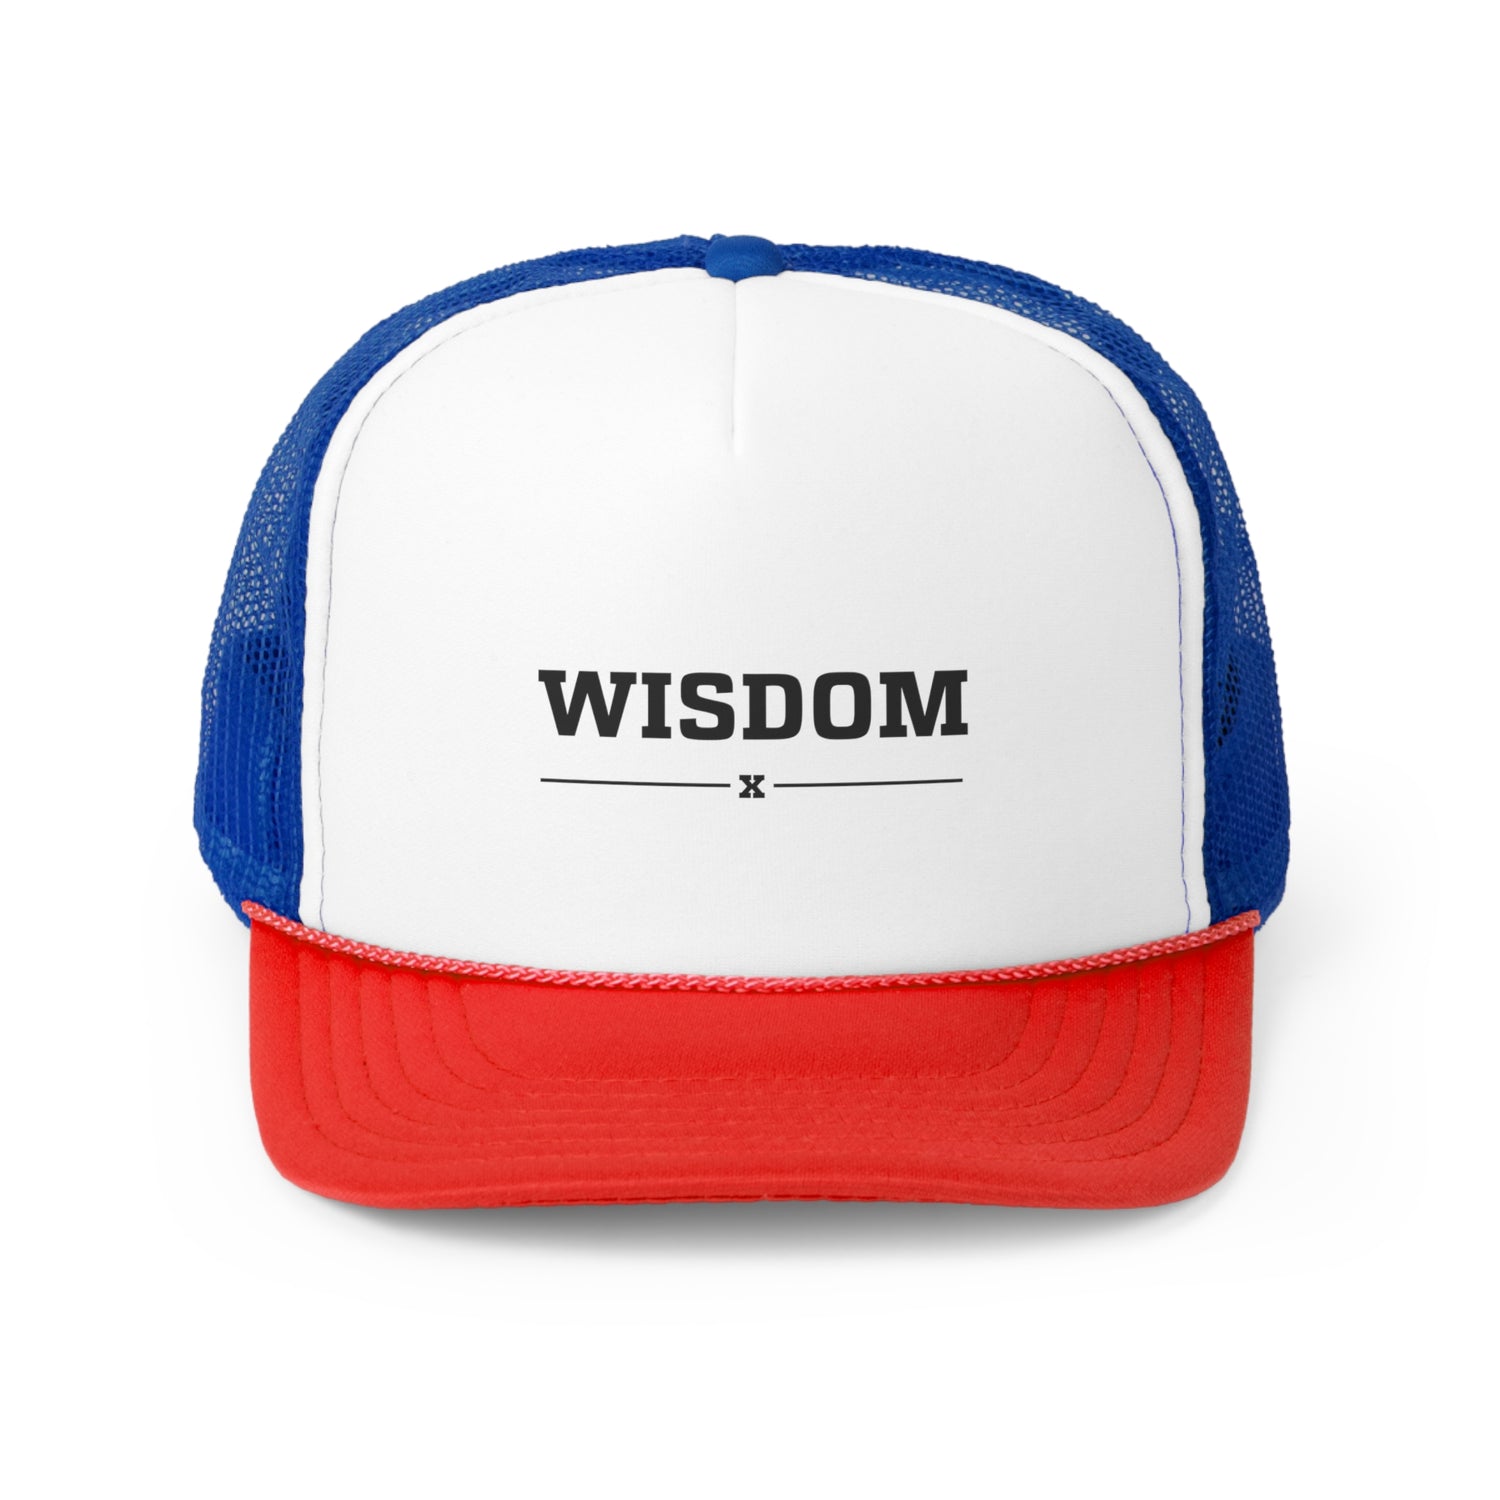 Wisdom Trucker Caps